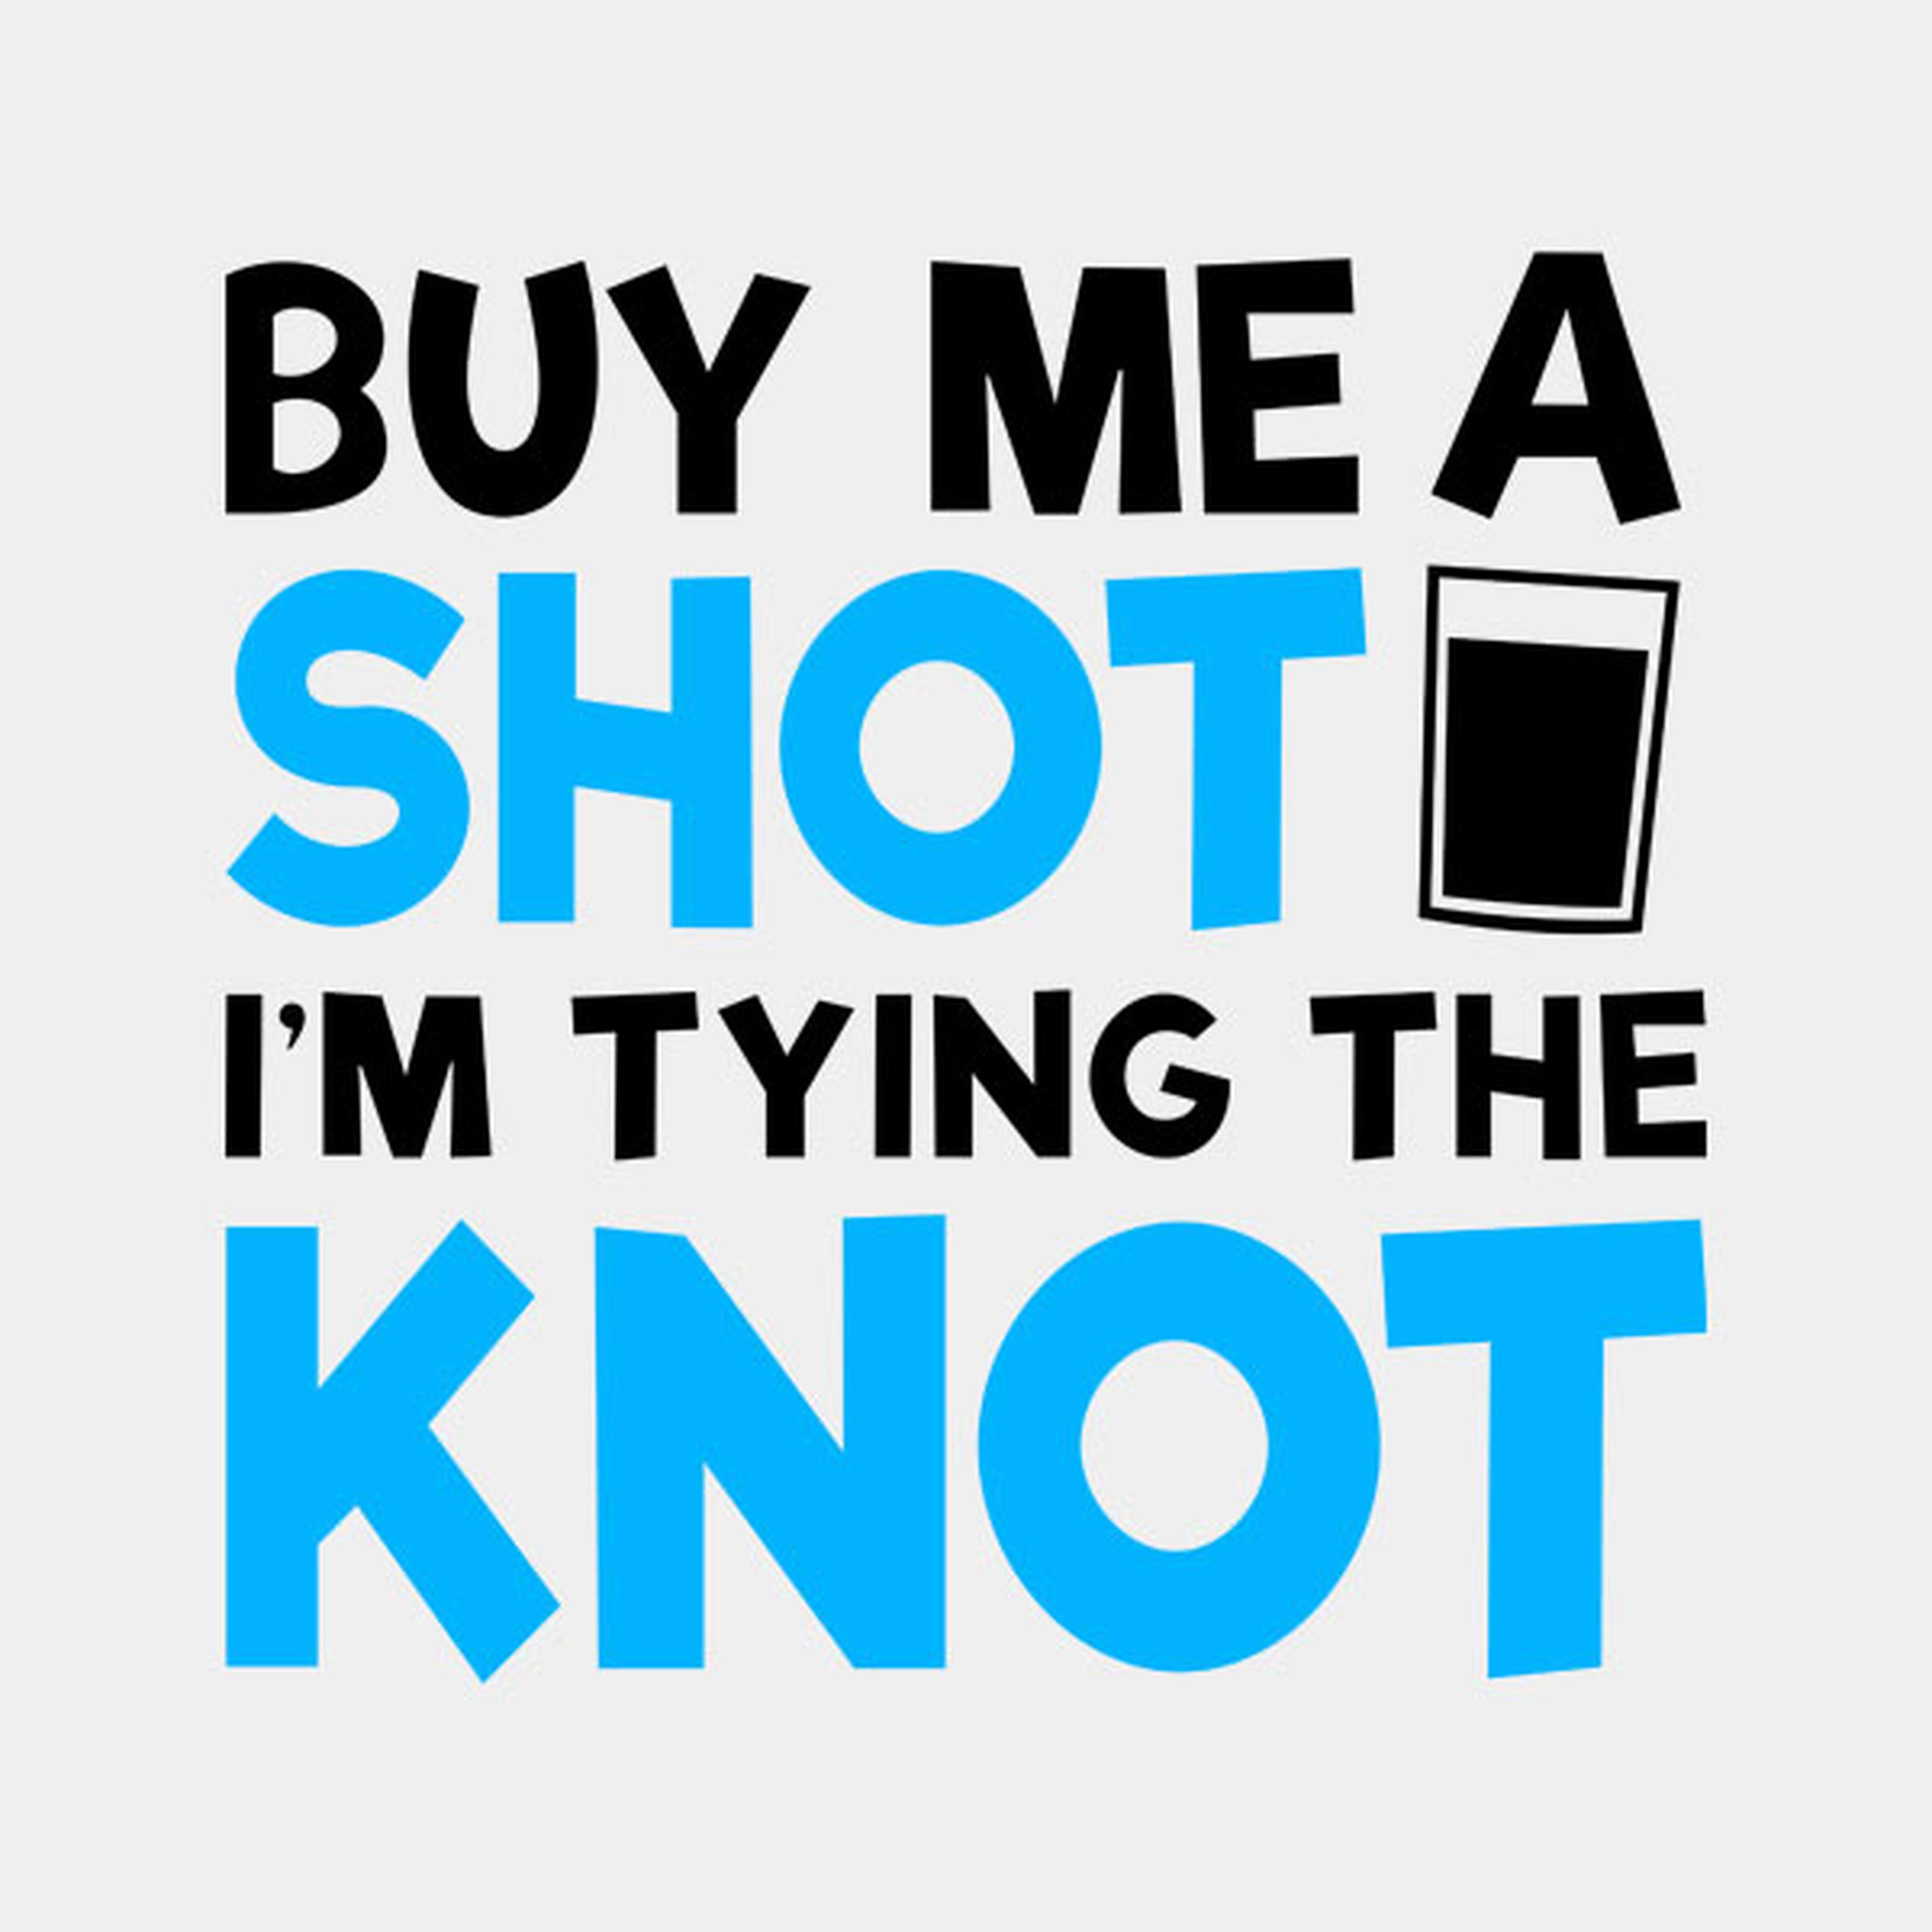 Buy me a shot, I'm tying the knot - T-shirt